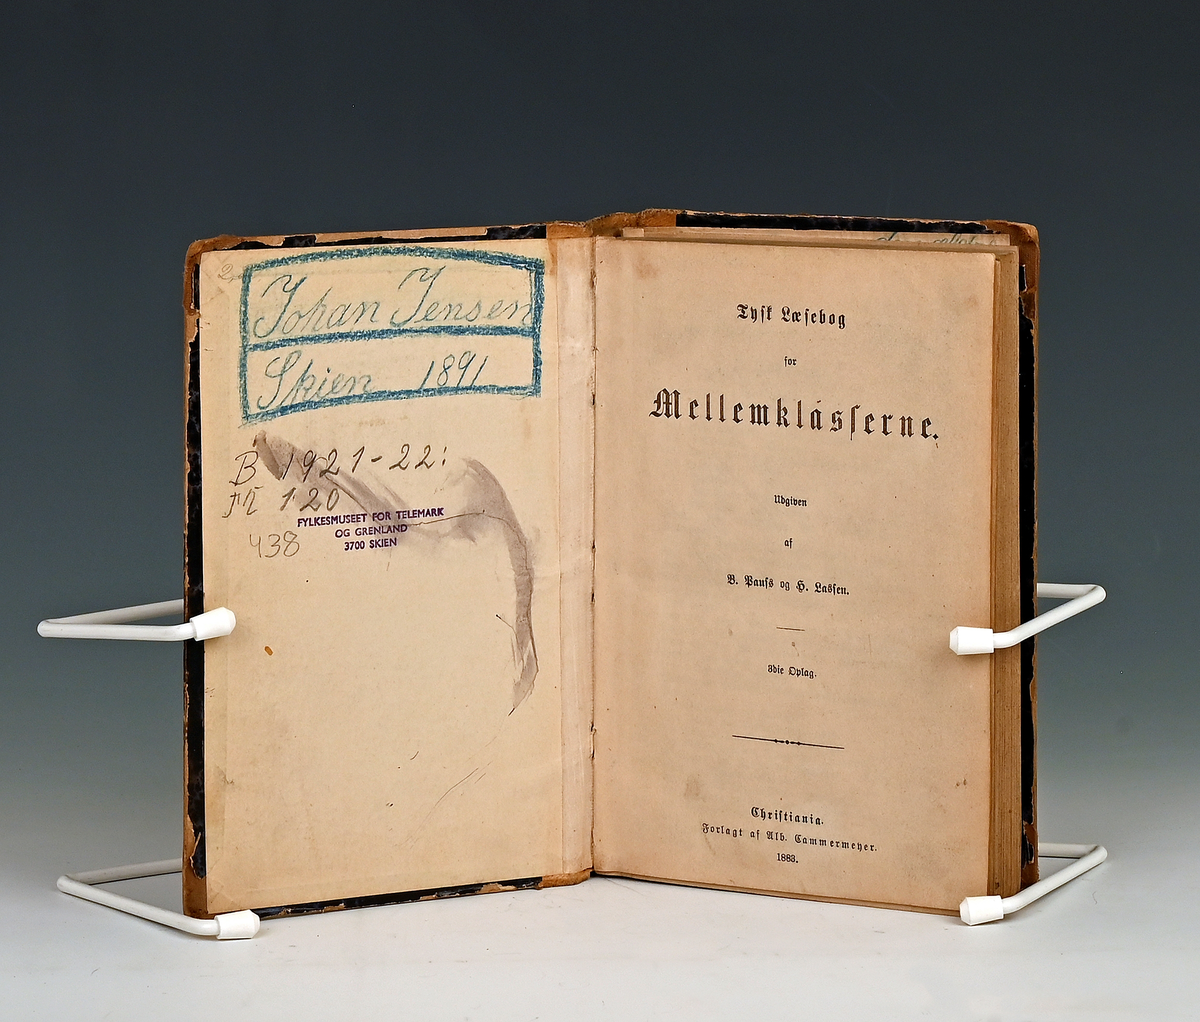 Prot: Paus og Lassen. Tysk Læsebog for Mellemklasserne. 3die Oplag. Christiania 1883. VIII + 416 s.